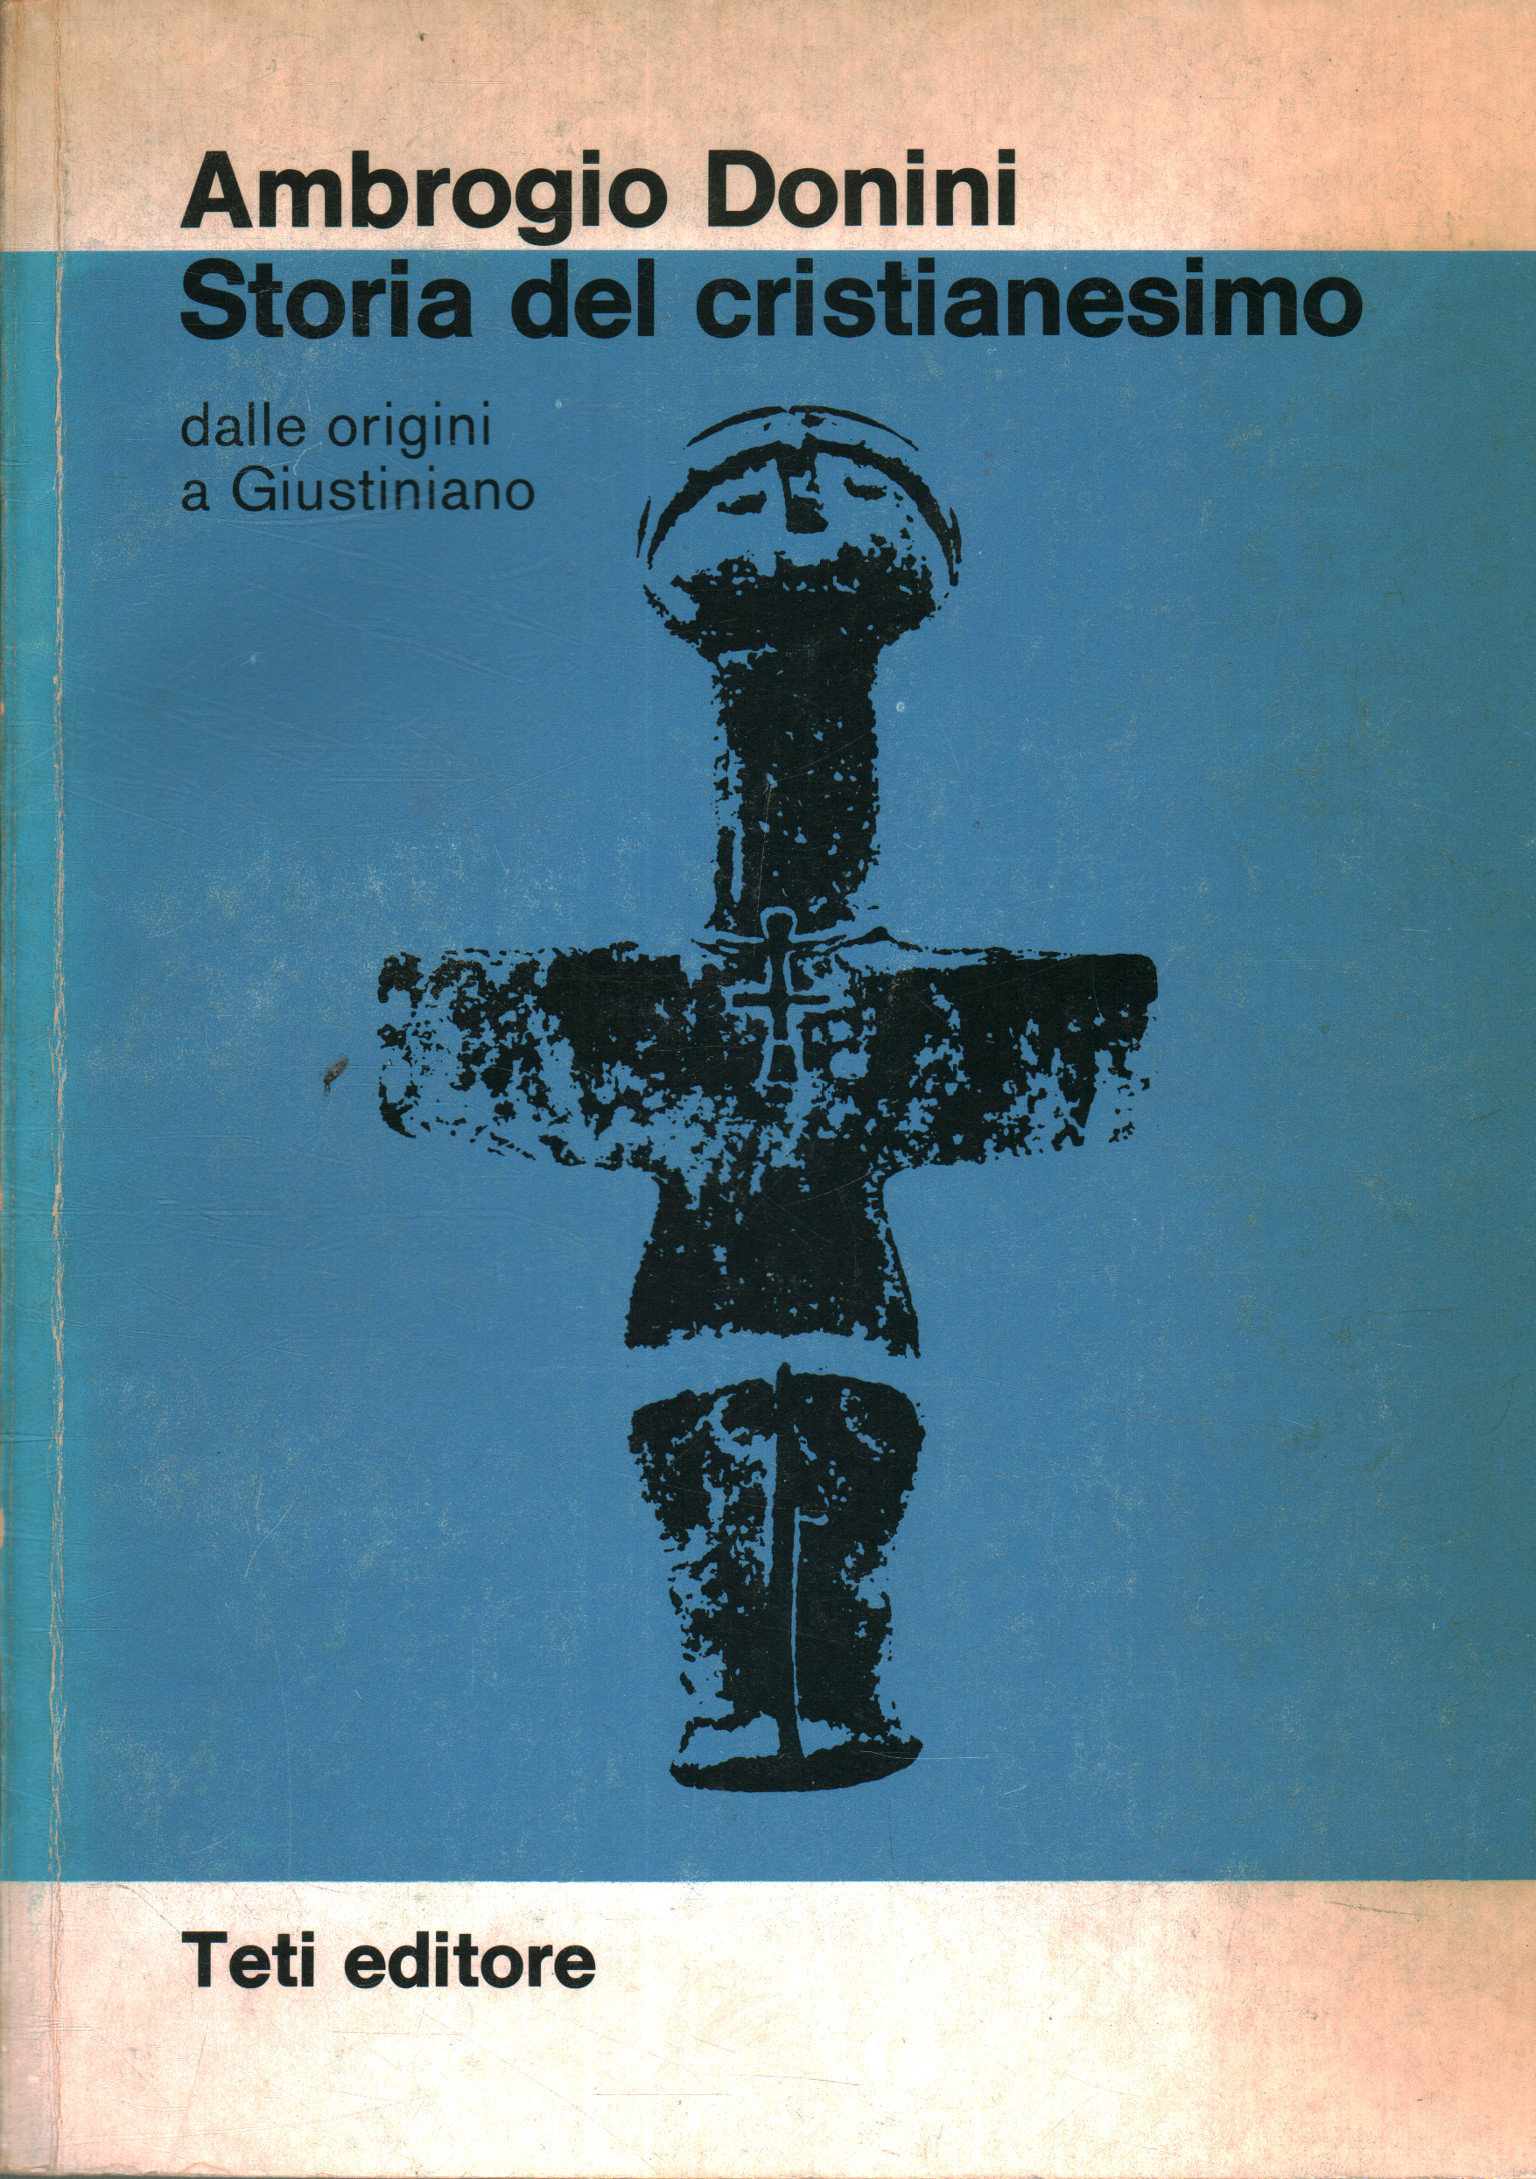 Histoire du christianisme, Ambrogio Donini